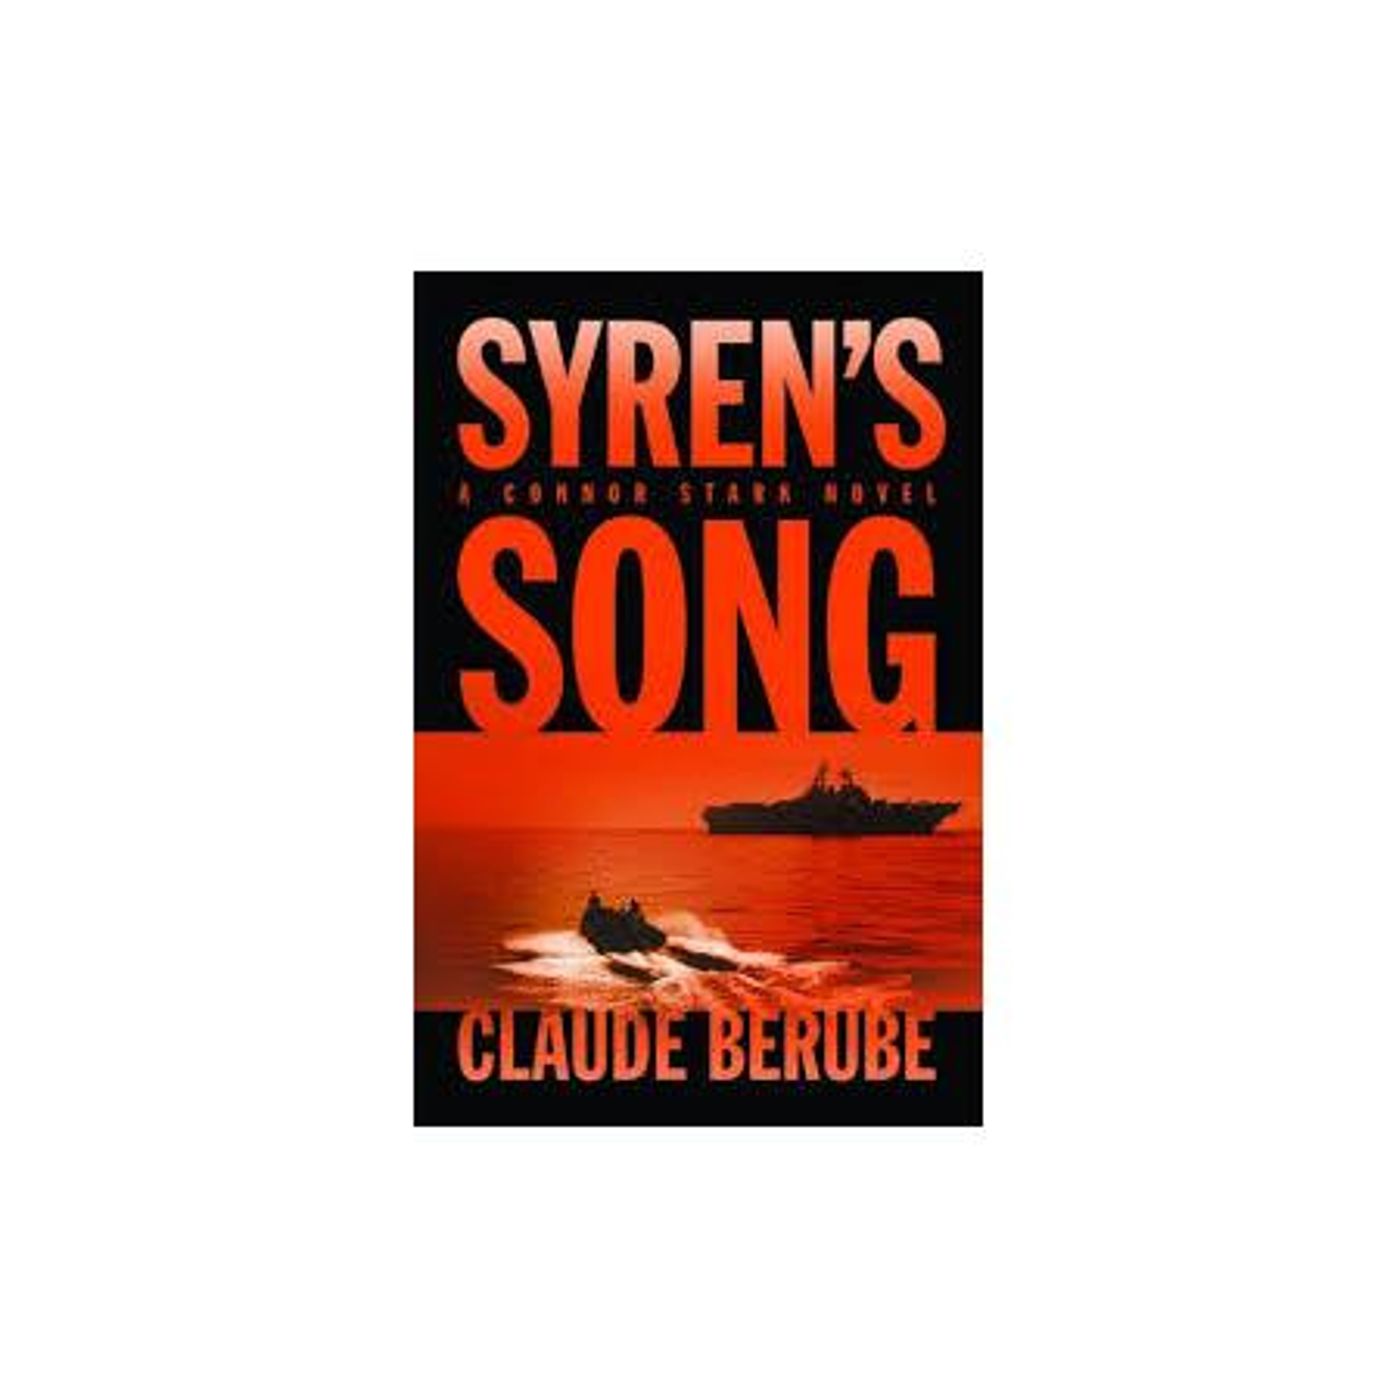 Episode 306: Author Claude Berube on his next book; Syren's Song